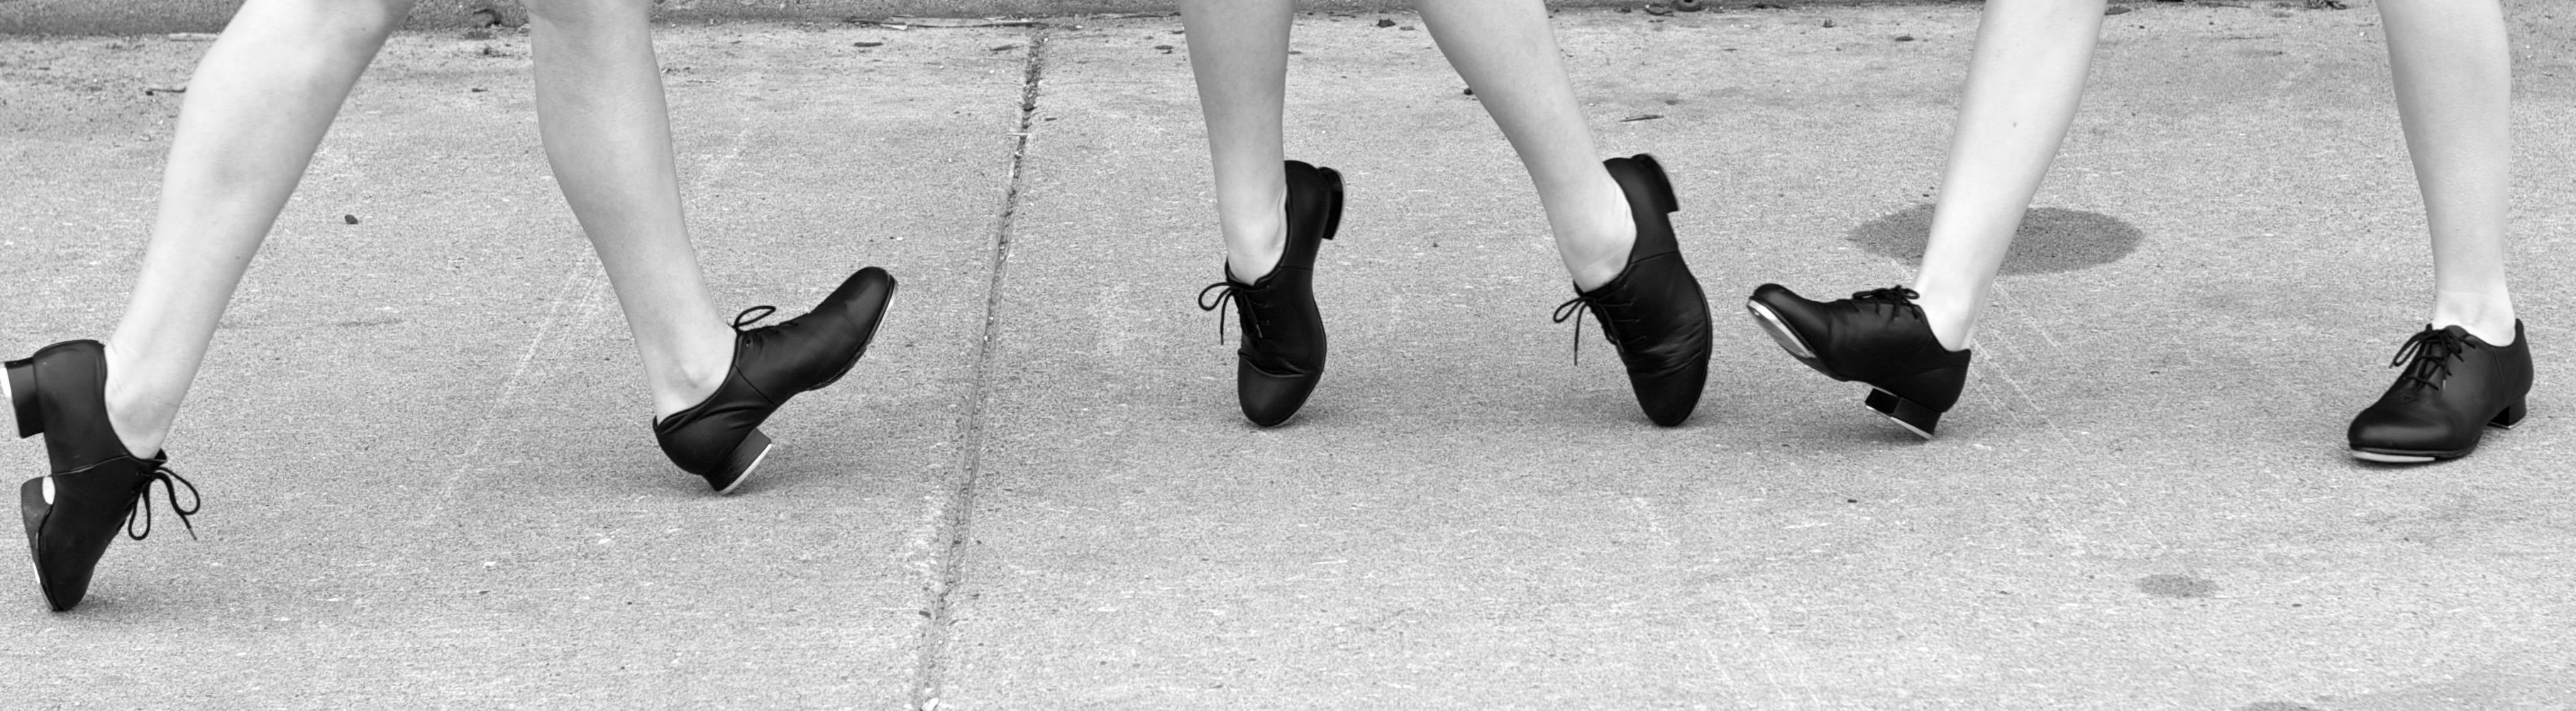 shoe tapping dance